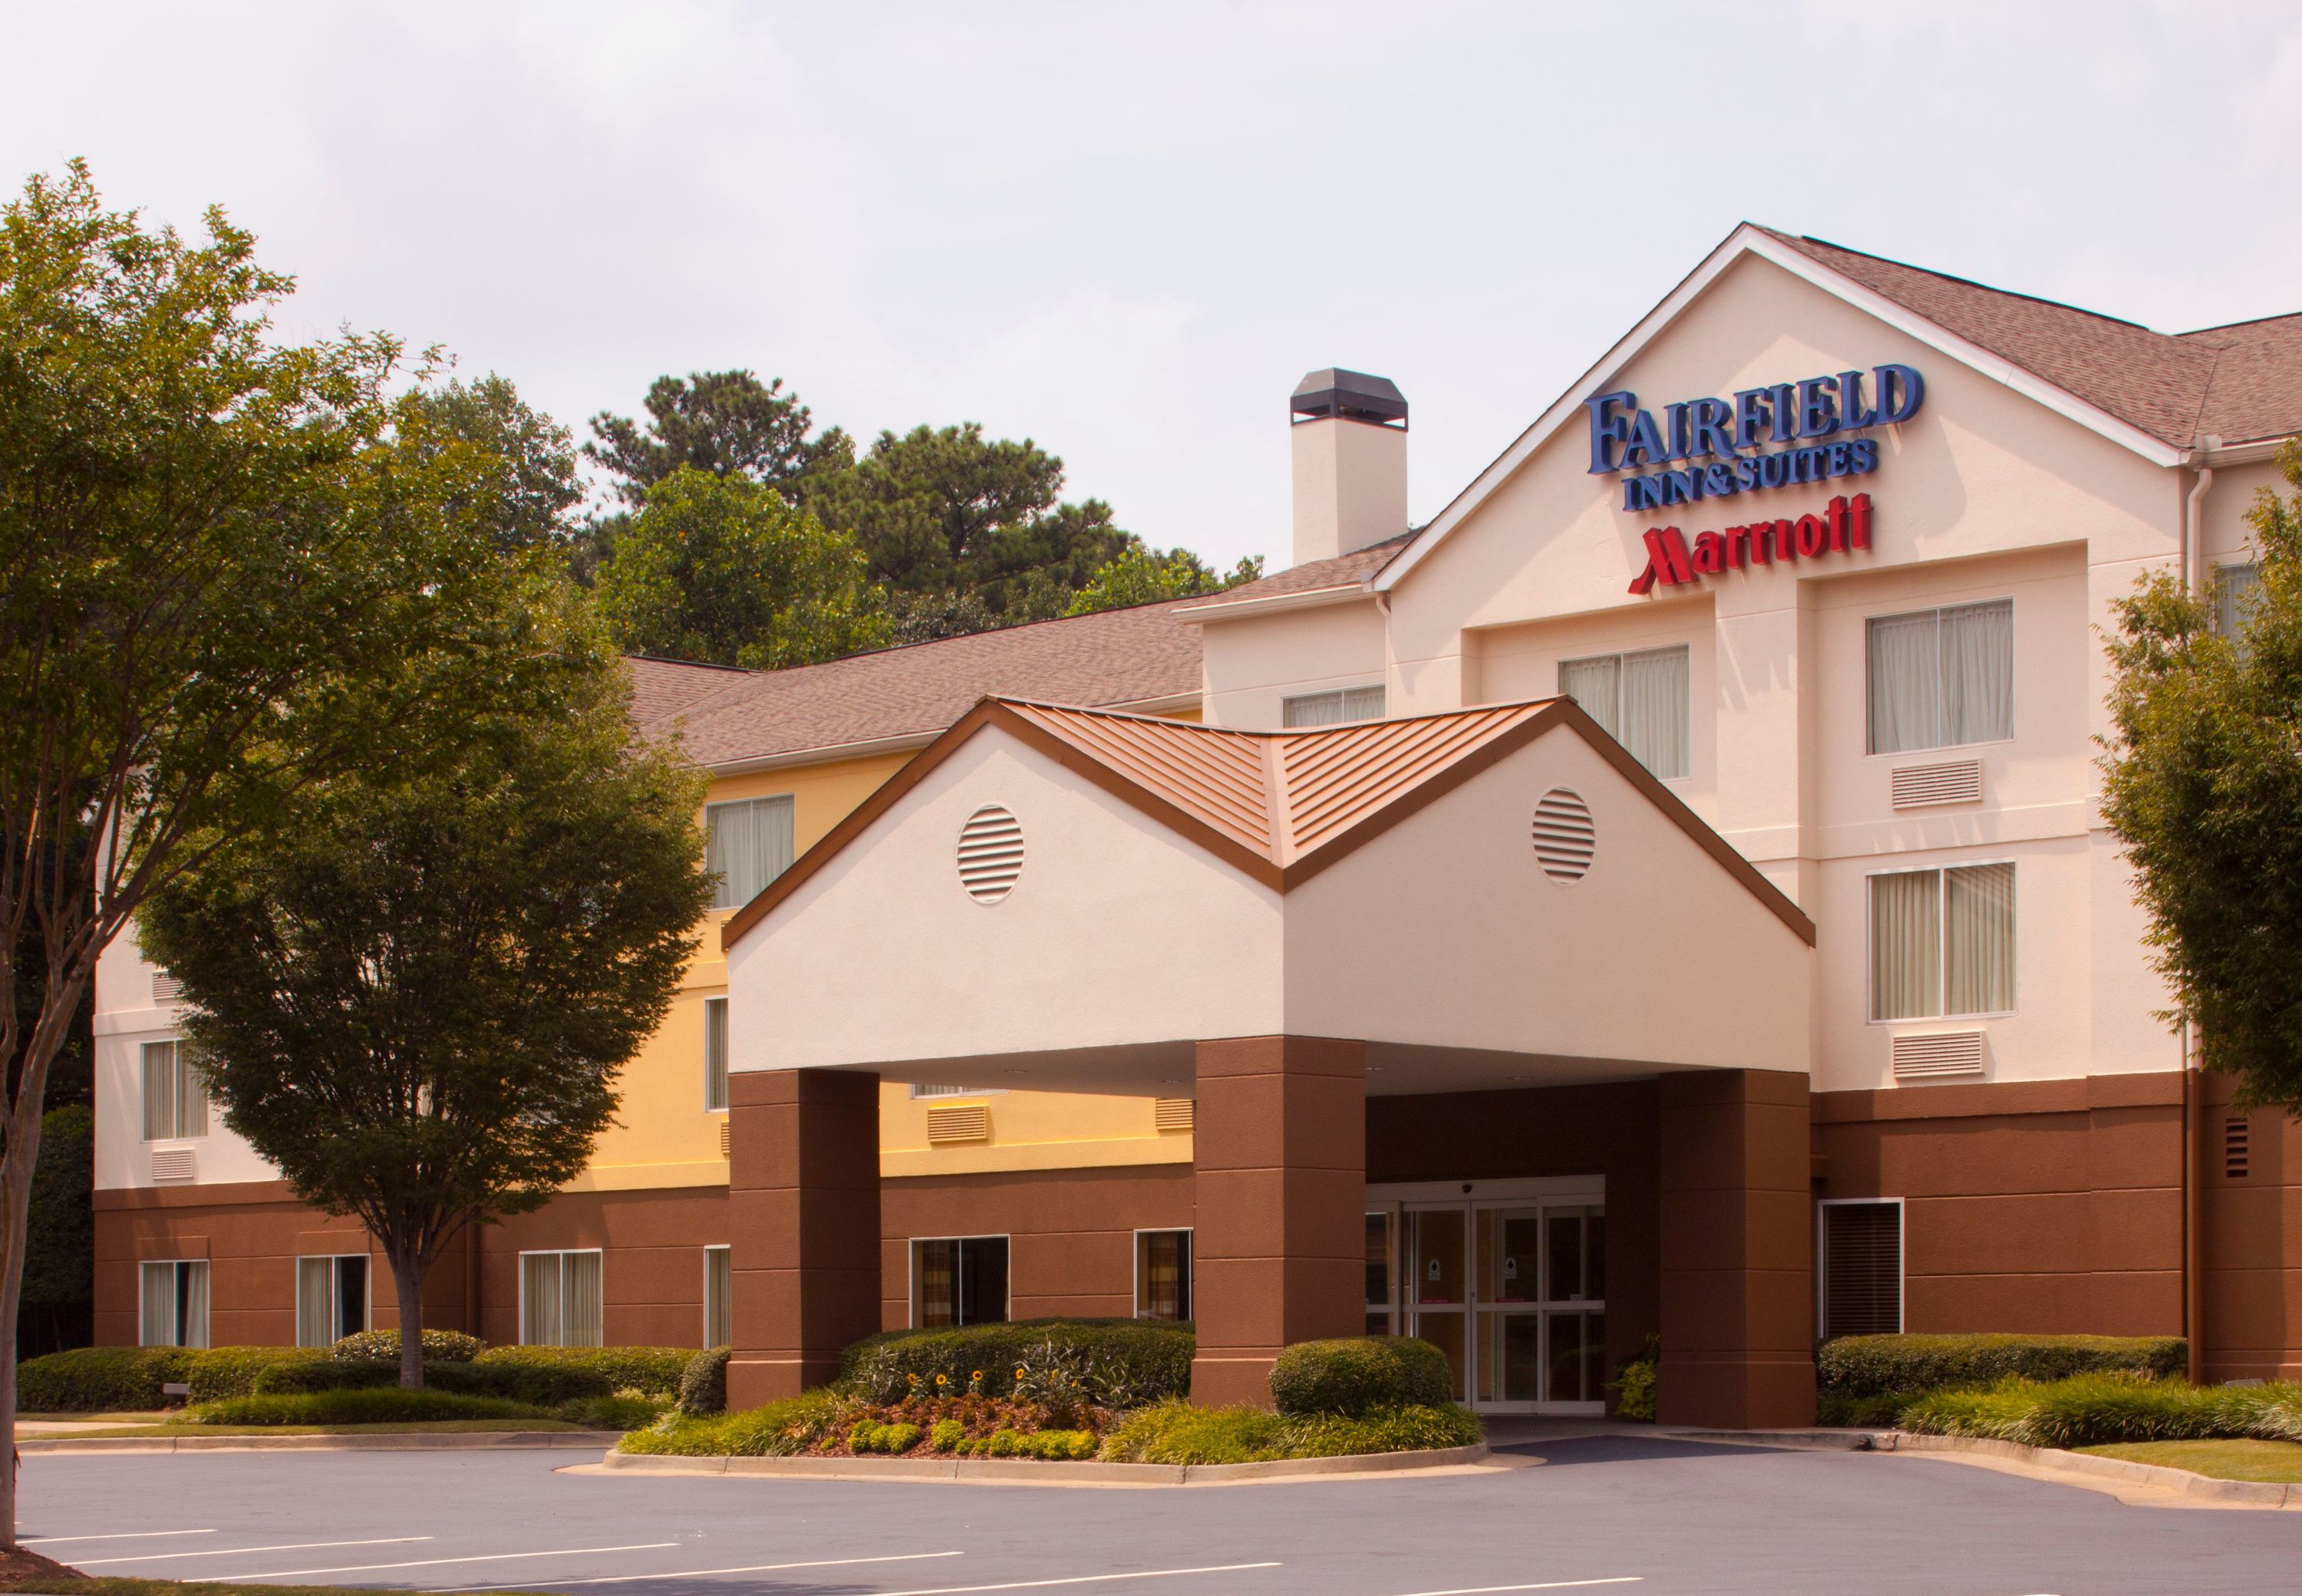 Photo of Fairfield Inn & Suites Atlanta Kennesaw, Kennesaw, GA